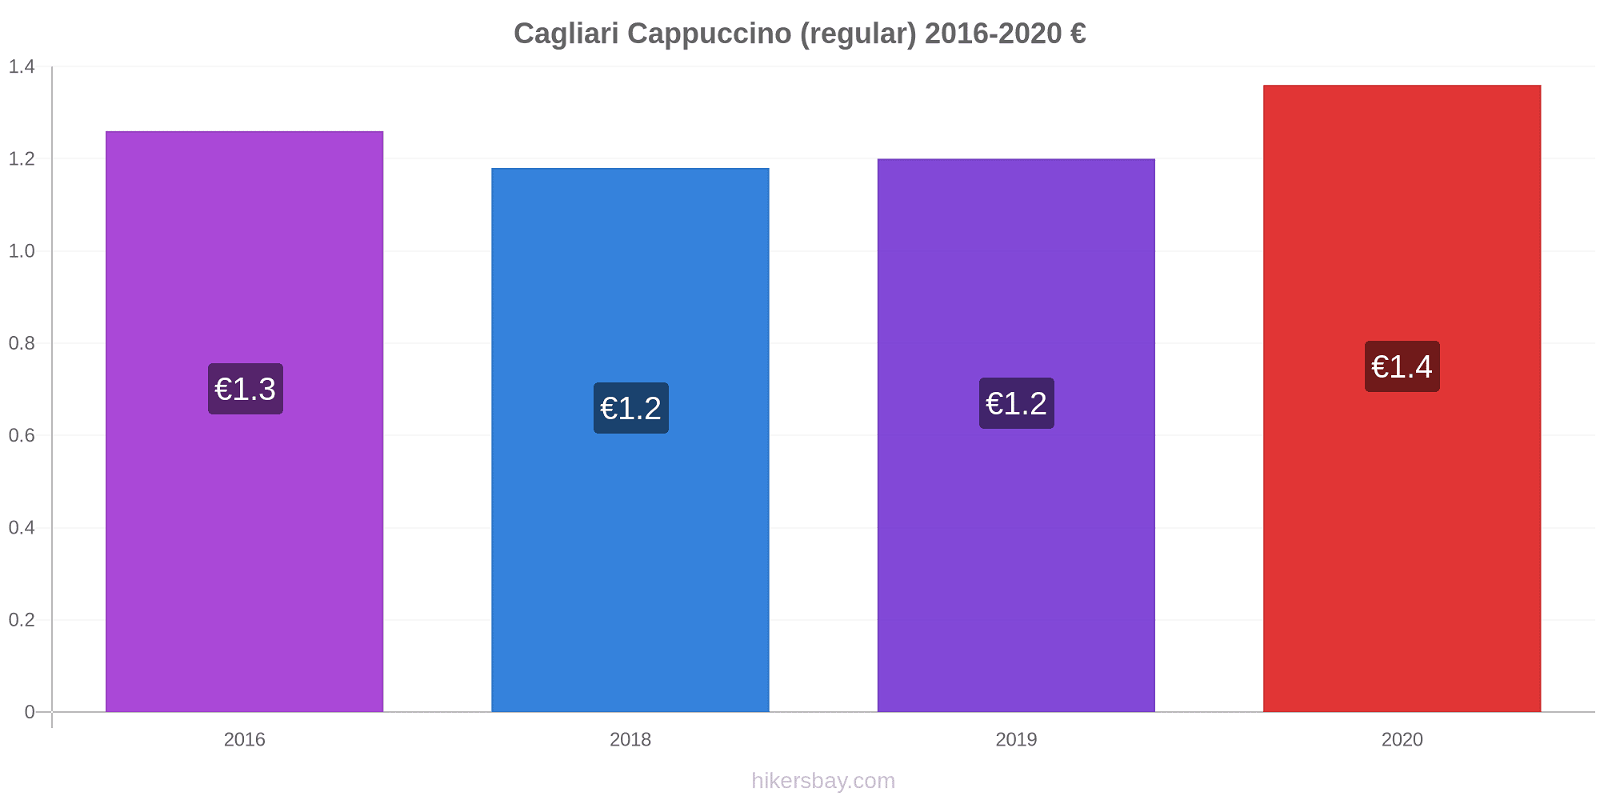 Cagliari price changes Cappuccino (regular) hikersbay.com